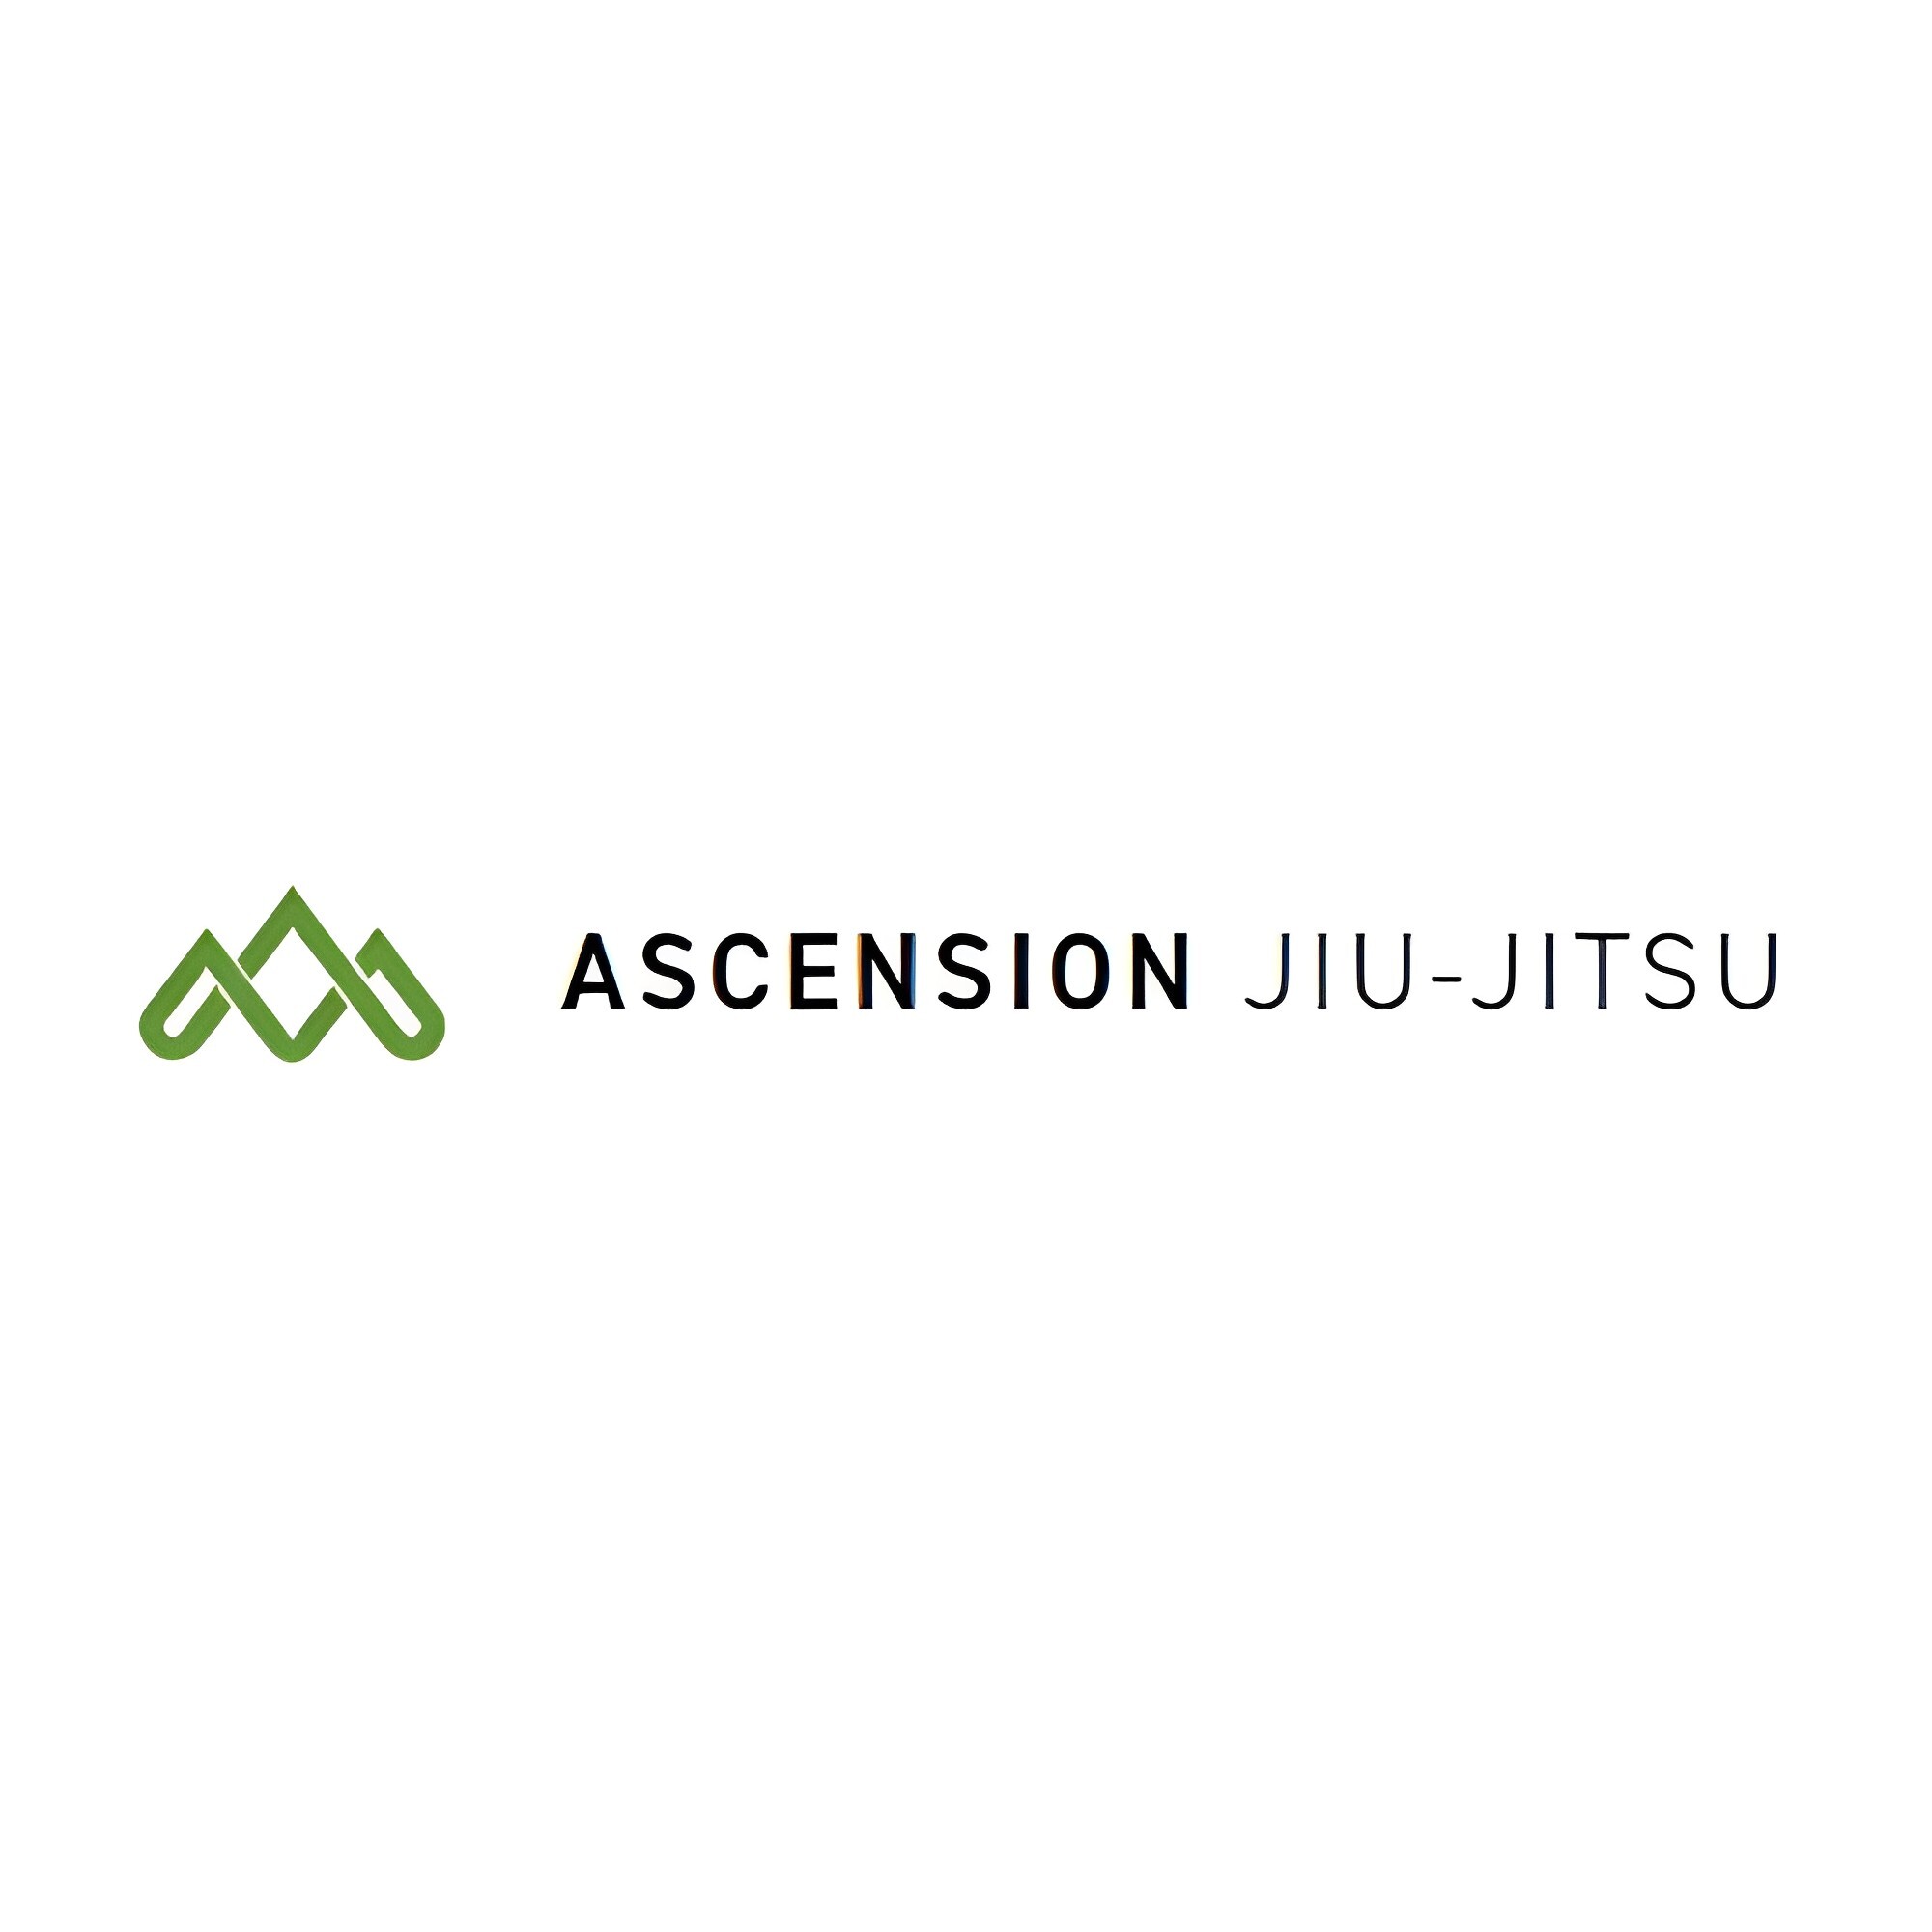 Ascension Jiu-Jitsu